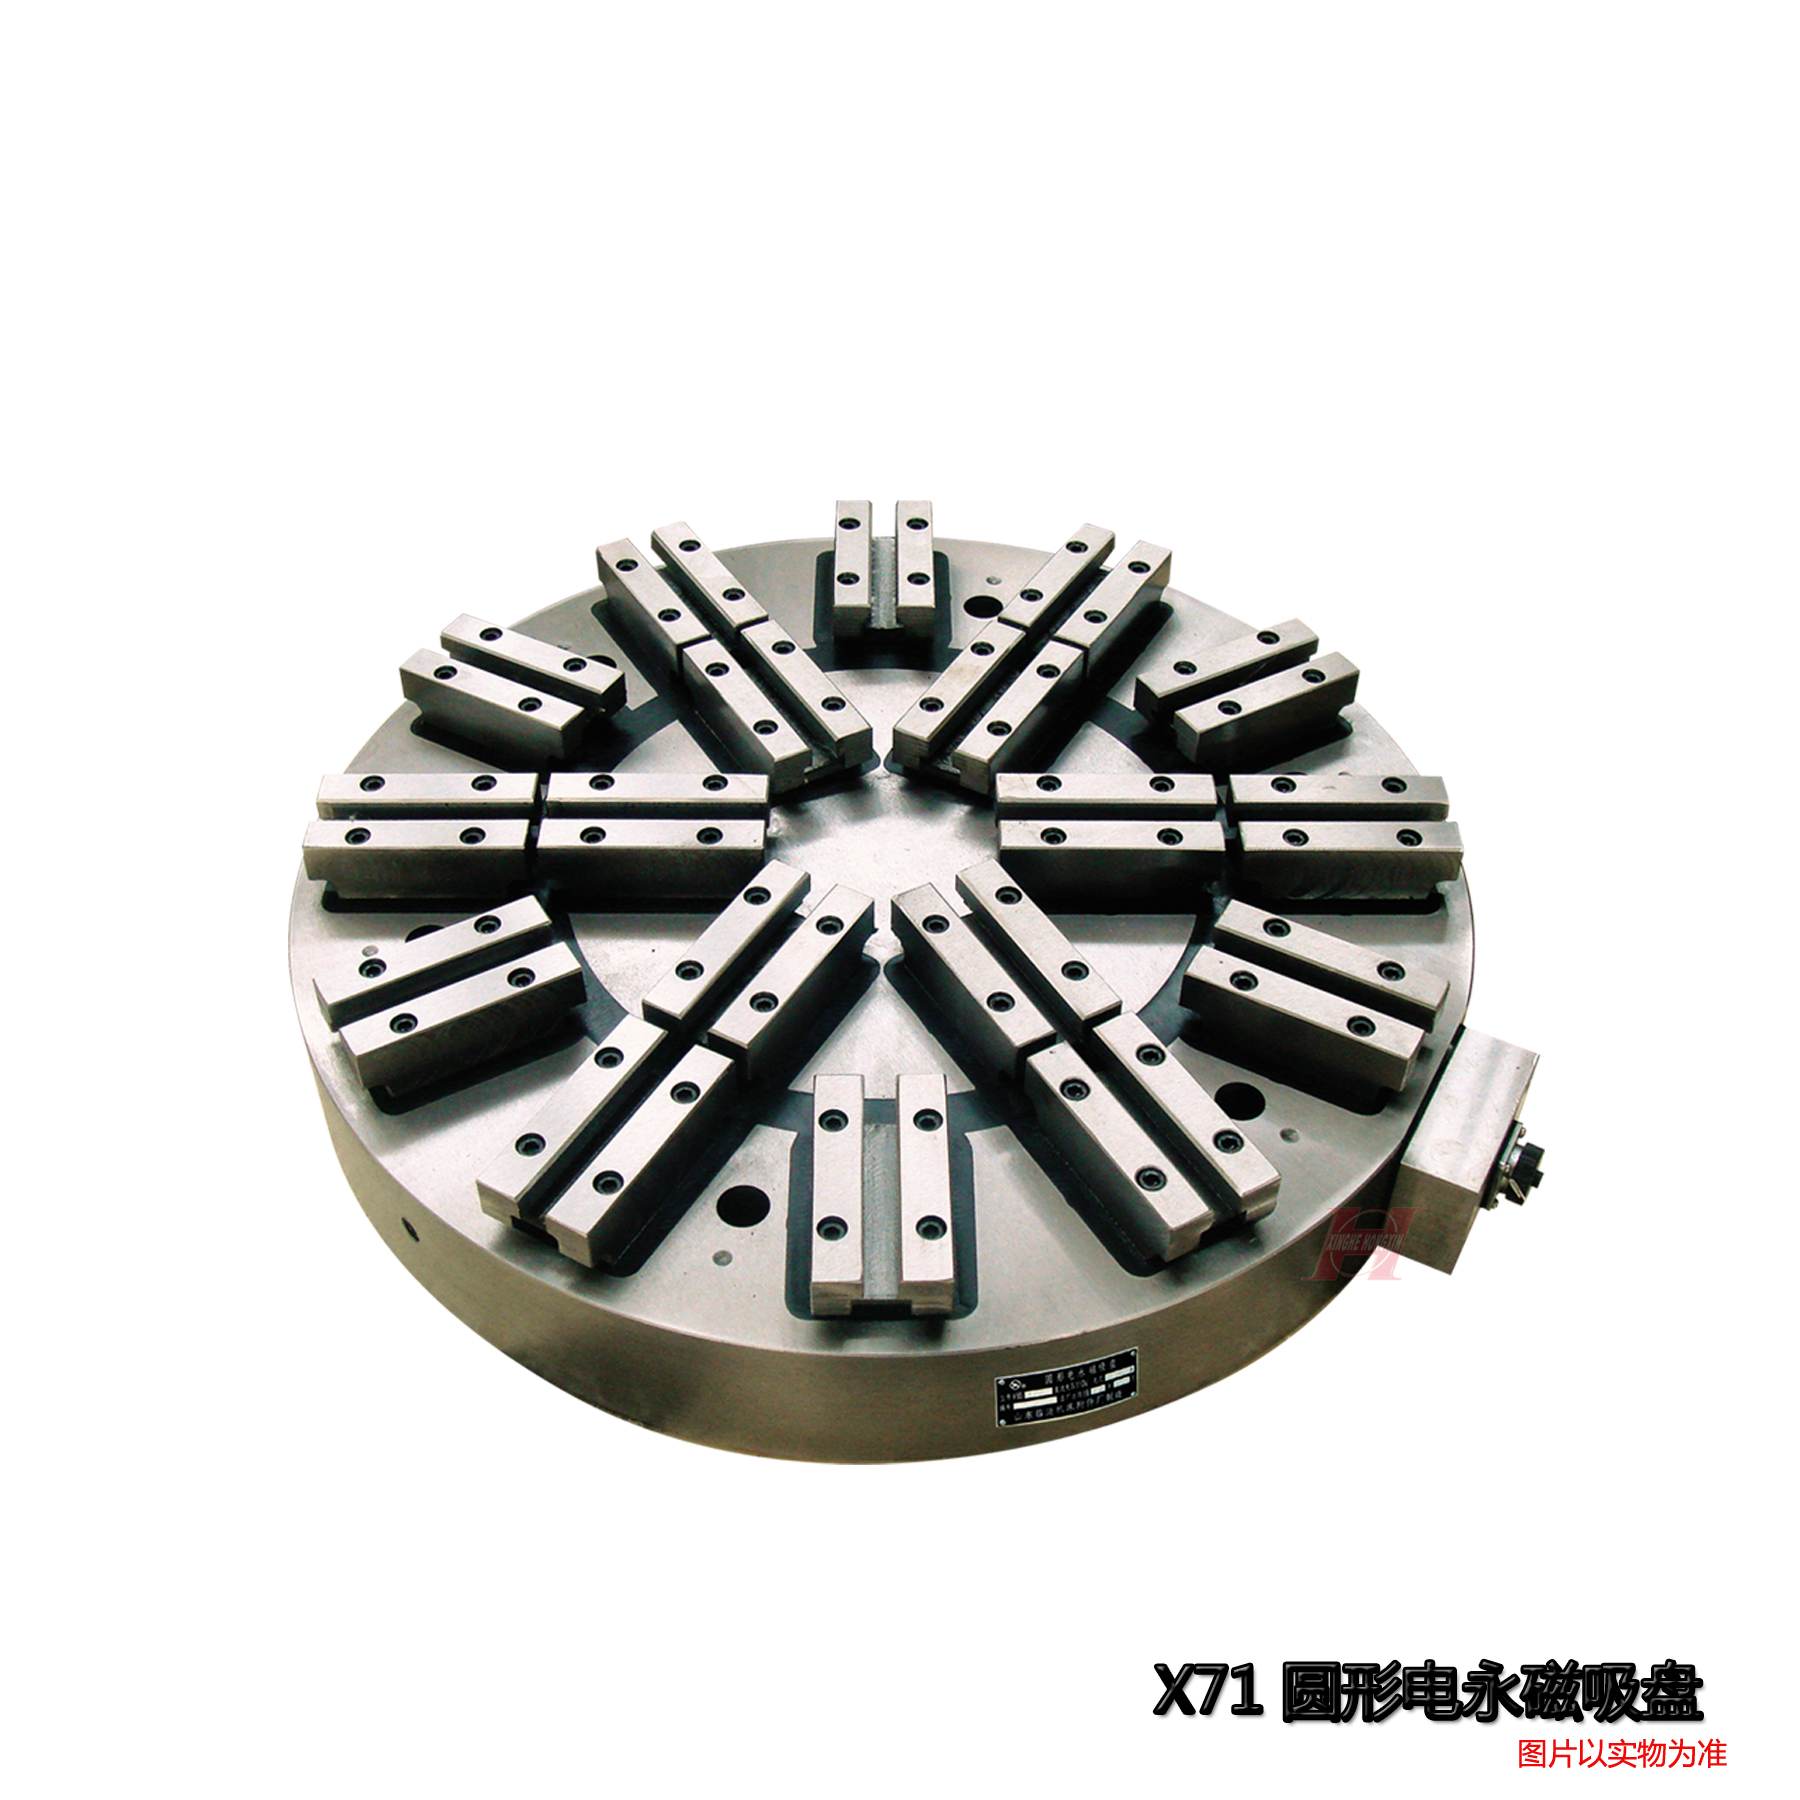 X71圆形电永磁吸盘